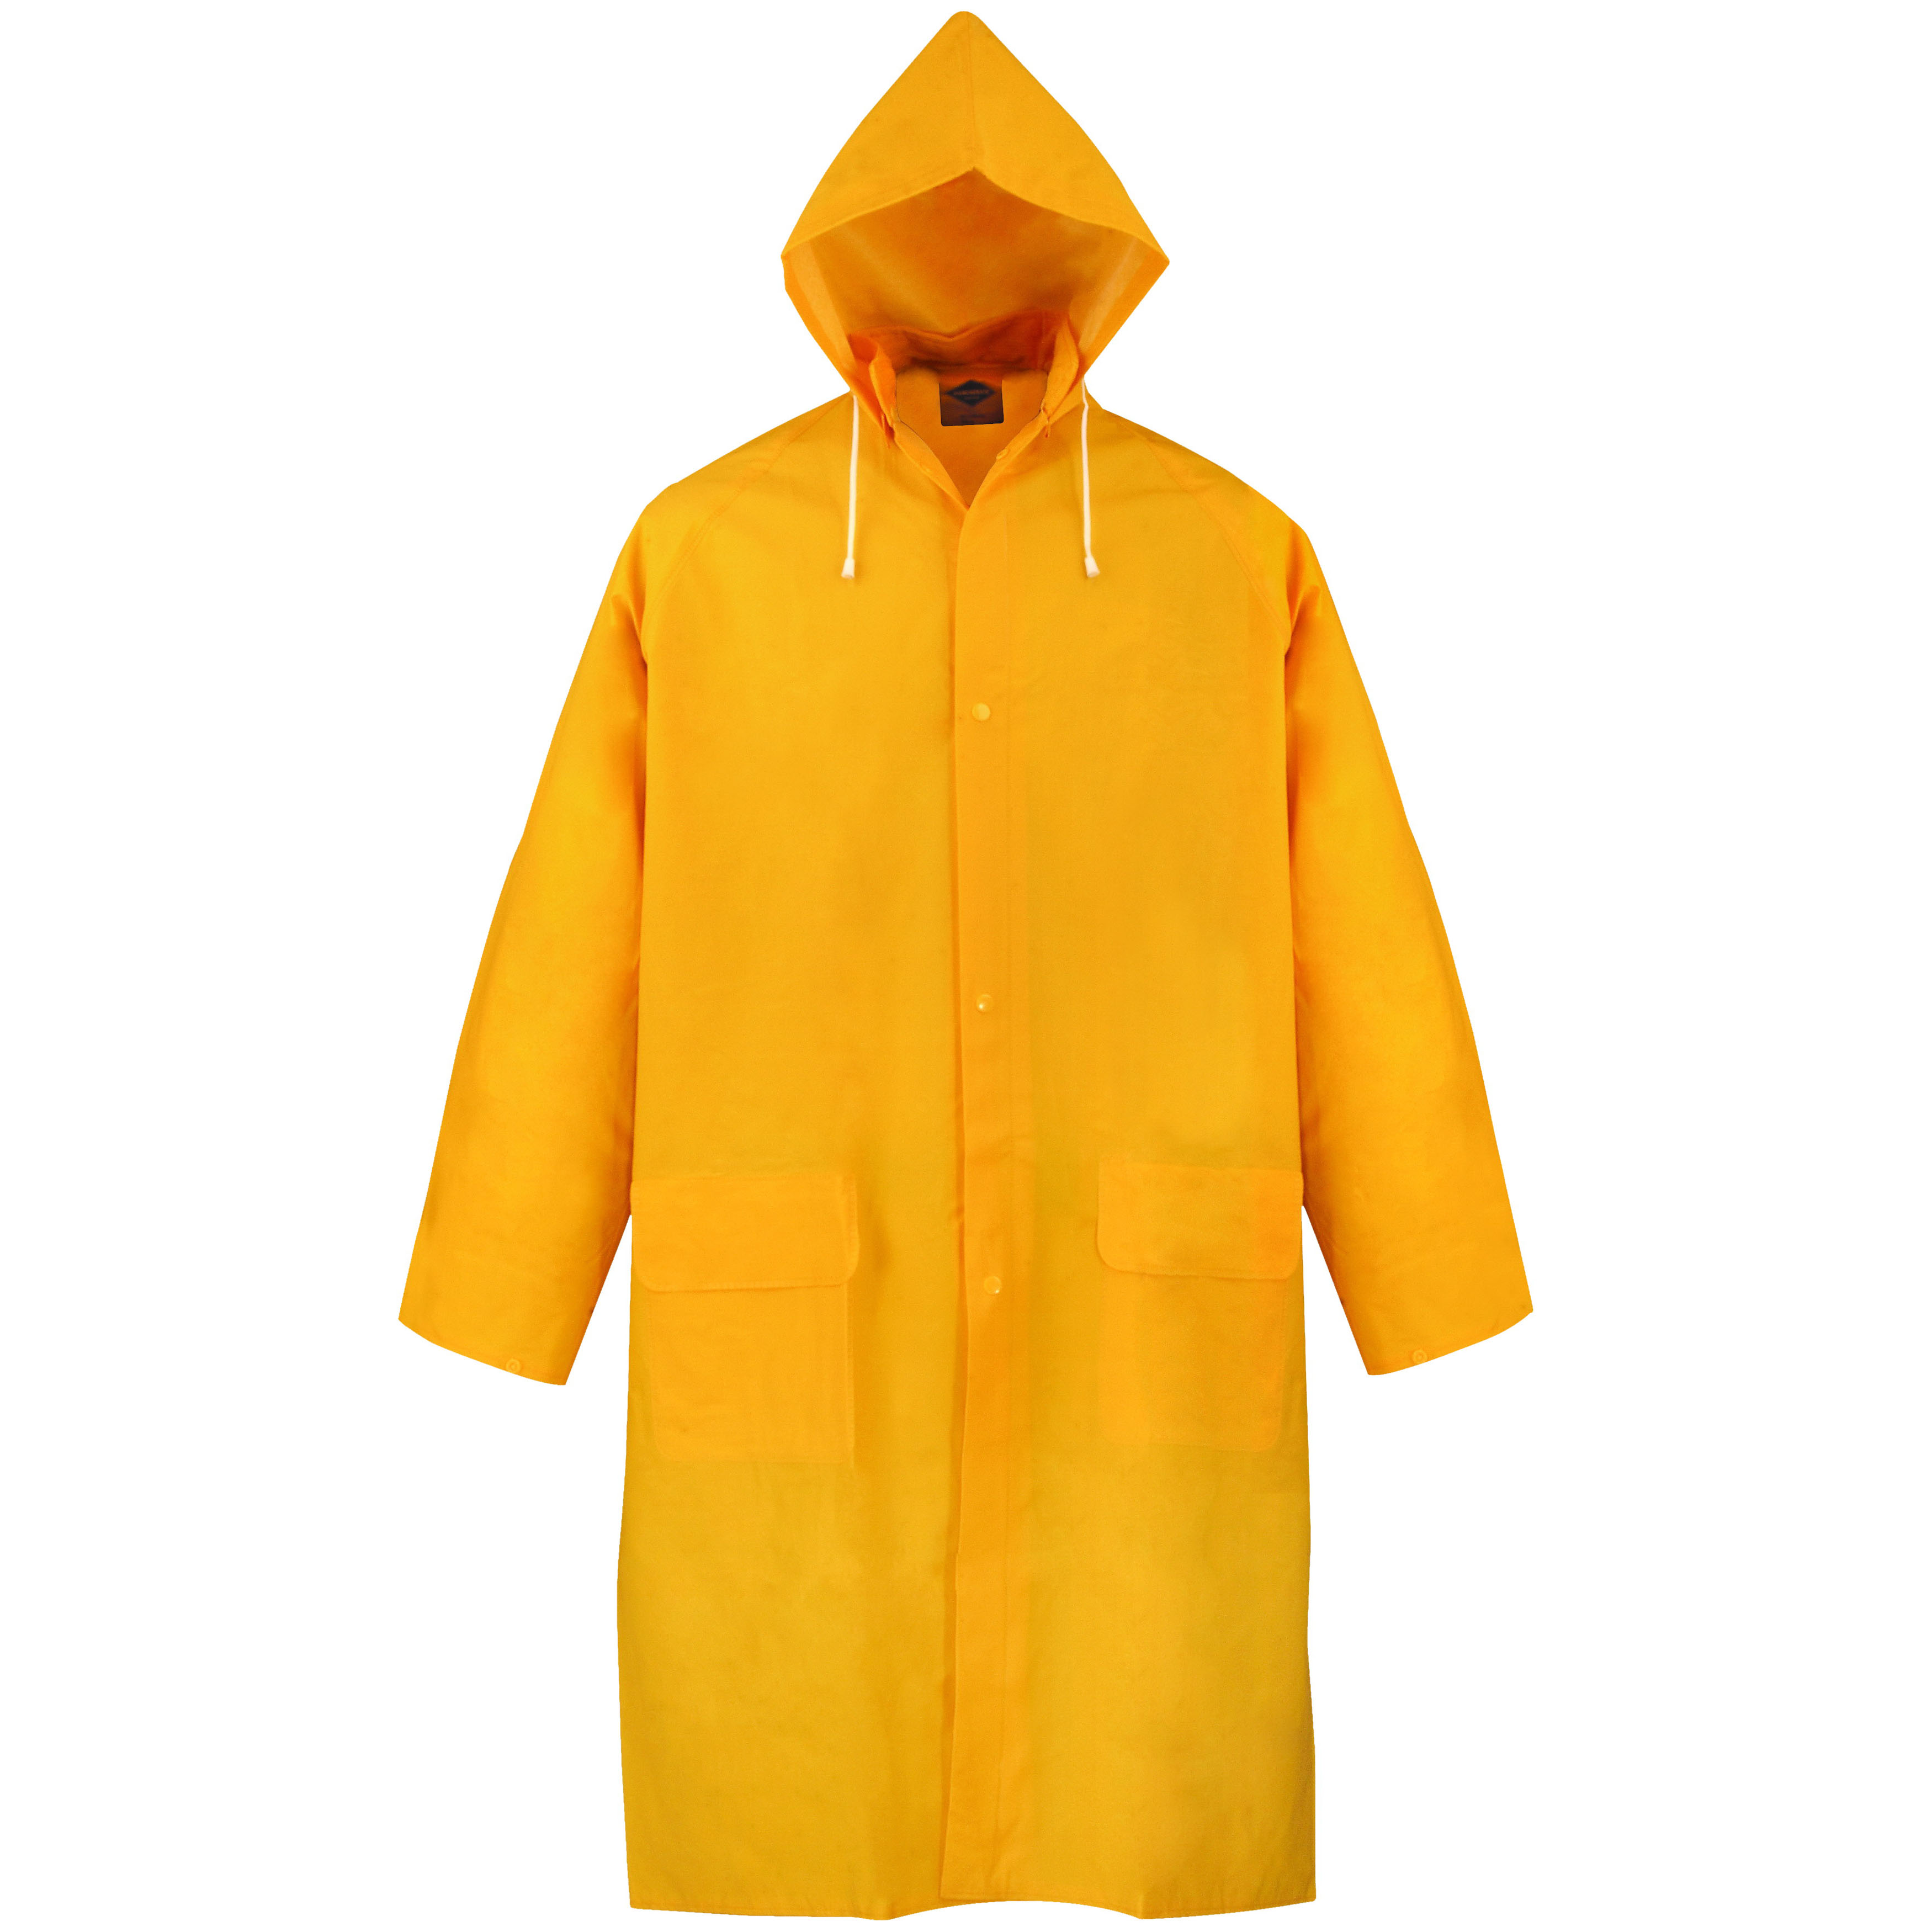 PY-800XL Raincoat, XL, Polyester/PVC, Yellow, Comfortable Corduroy Collar, Double Fly Snap Closure, Knee